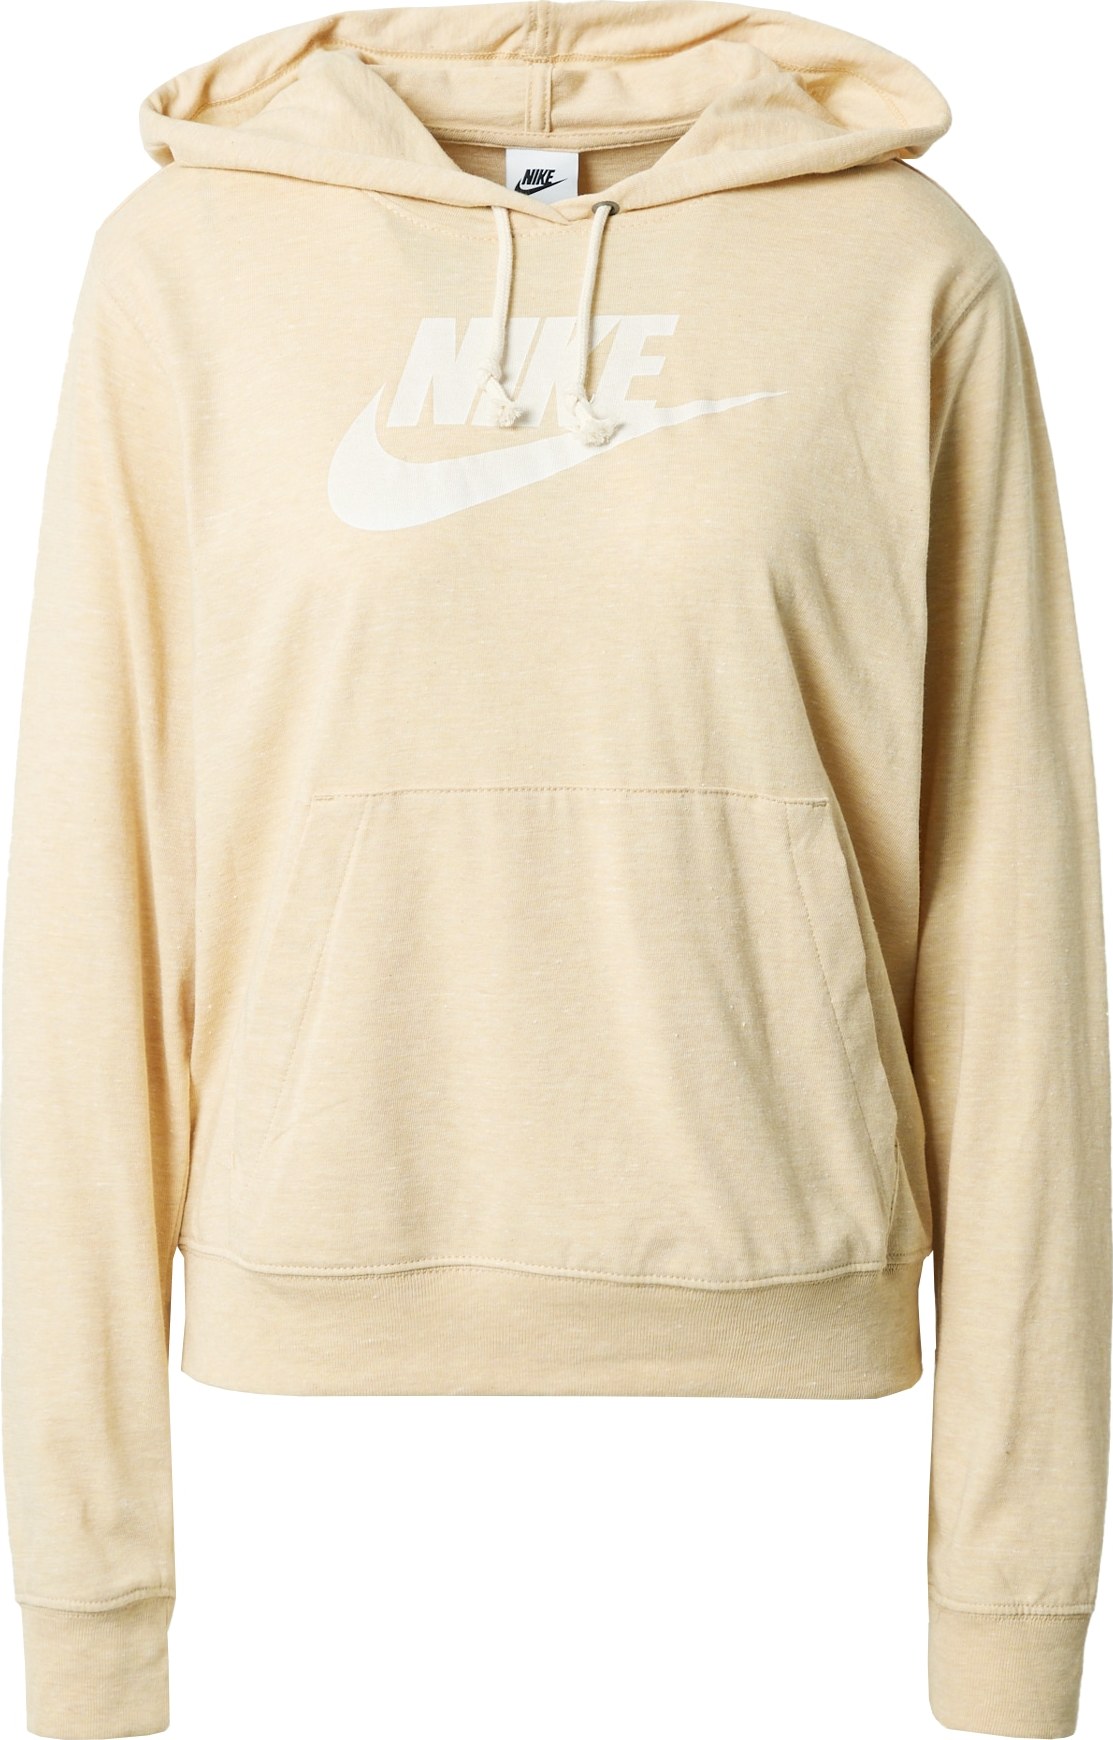 Nike Sportswear Mikina velbloudí / bílá